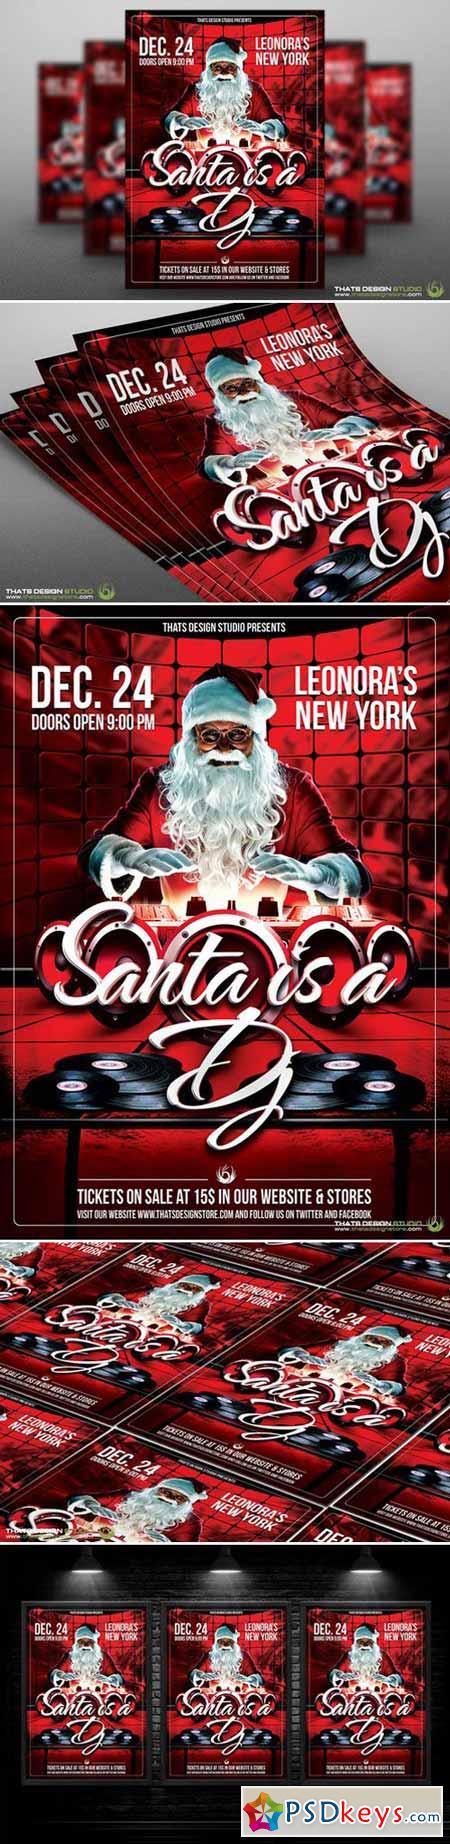 Santa is a DJ Flyer Template 92542